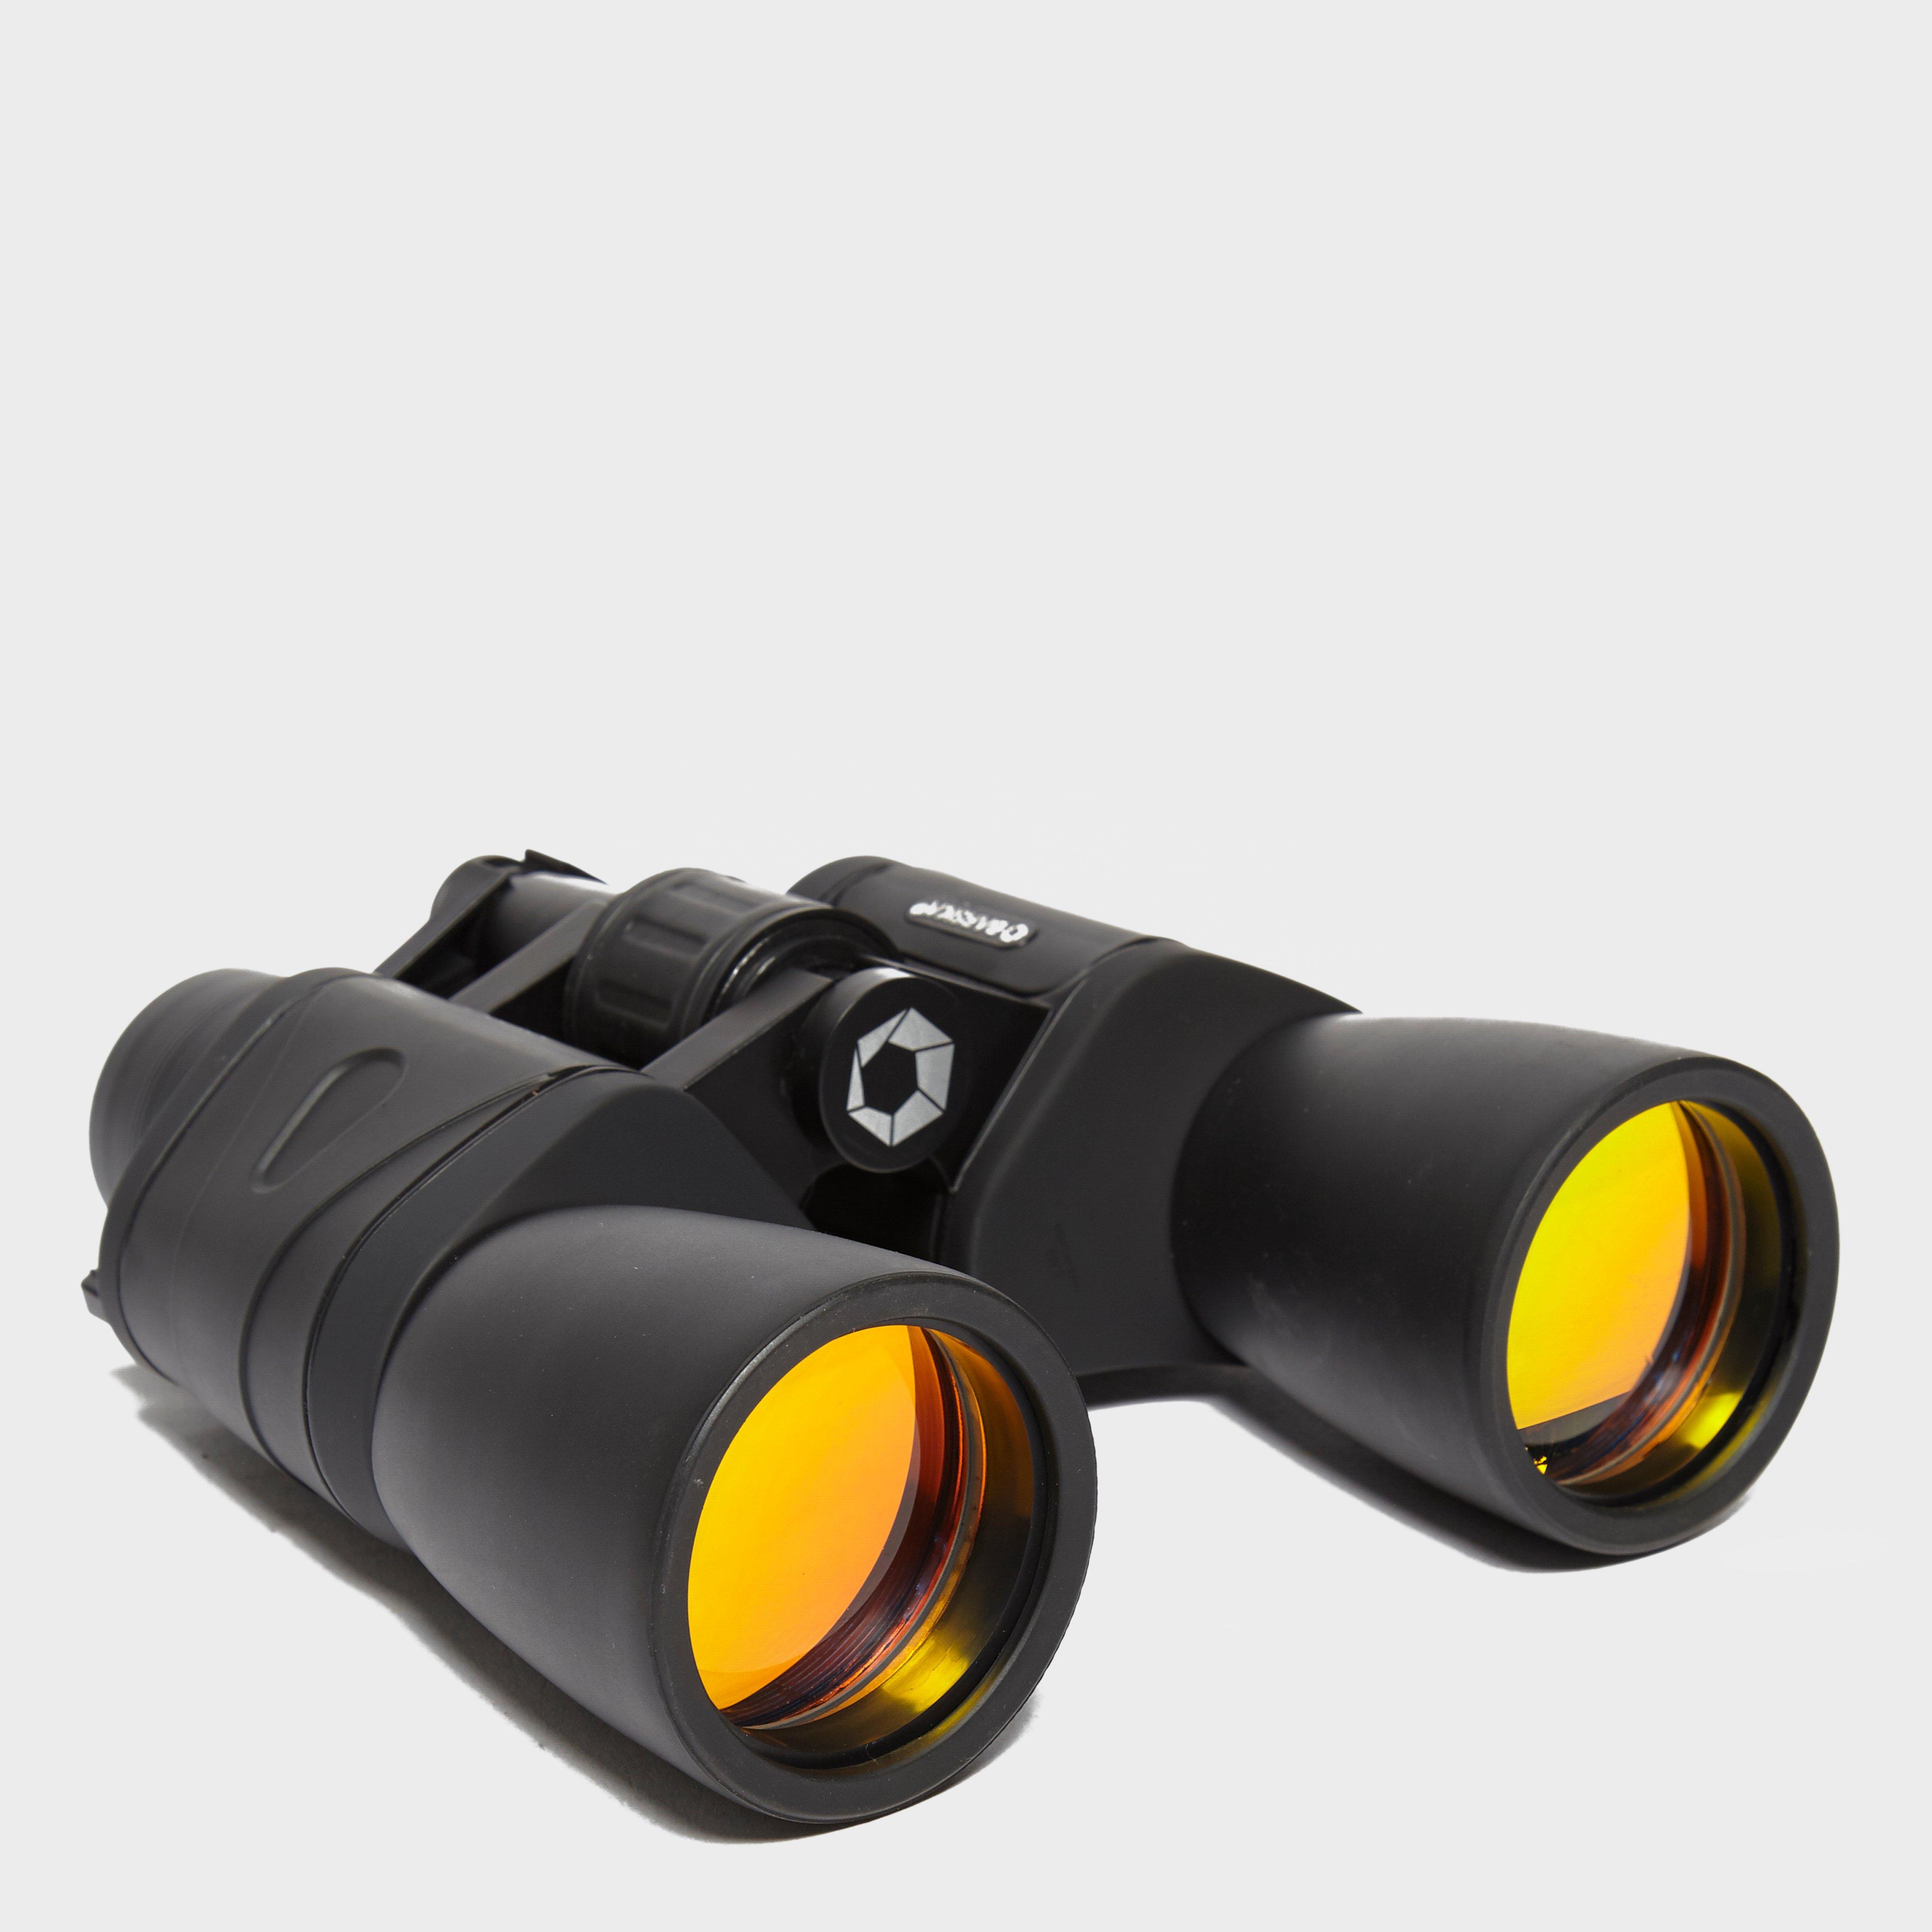 Barska Gladiator Zoom Binoculars 1-30 X 50mm - Black/10-30x50  Black/10-30x50